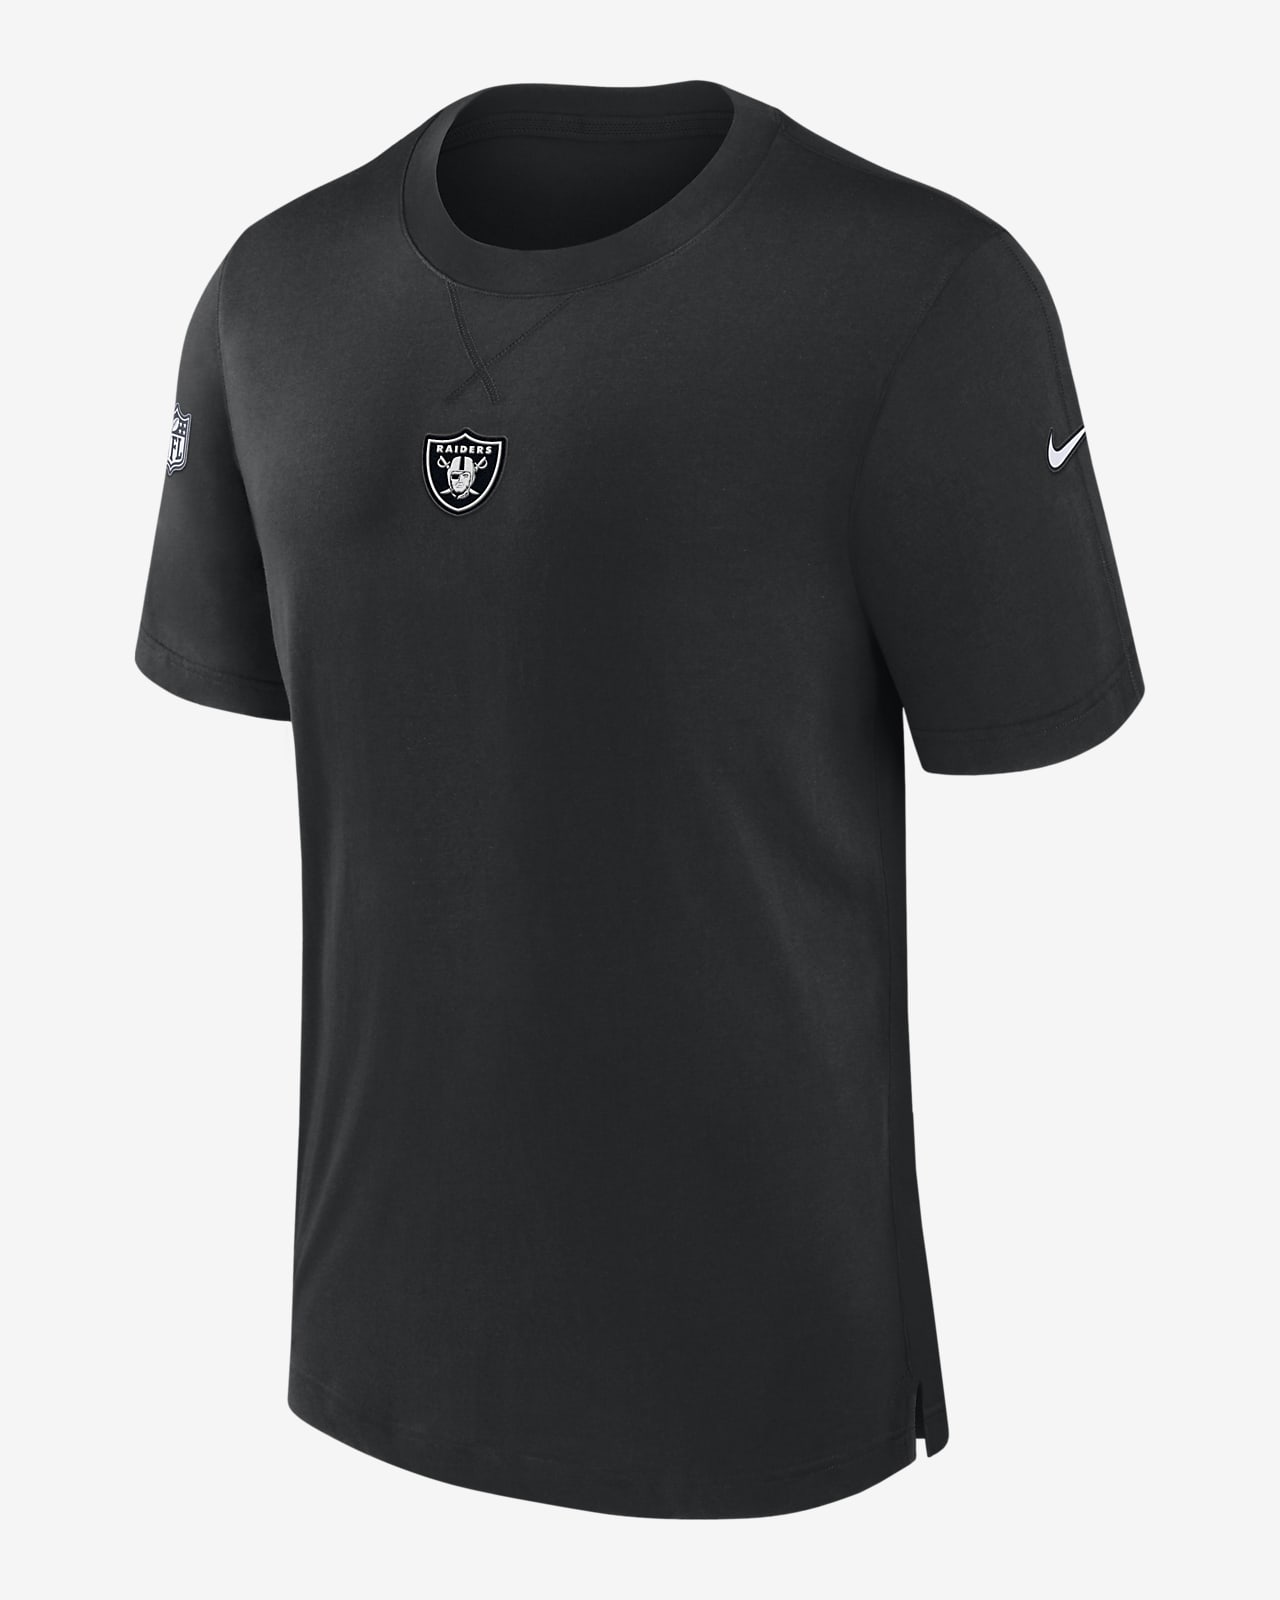 Playera Nike Dri-FIT de la NFL para hombre Las Vegas Raiders Sideline